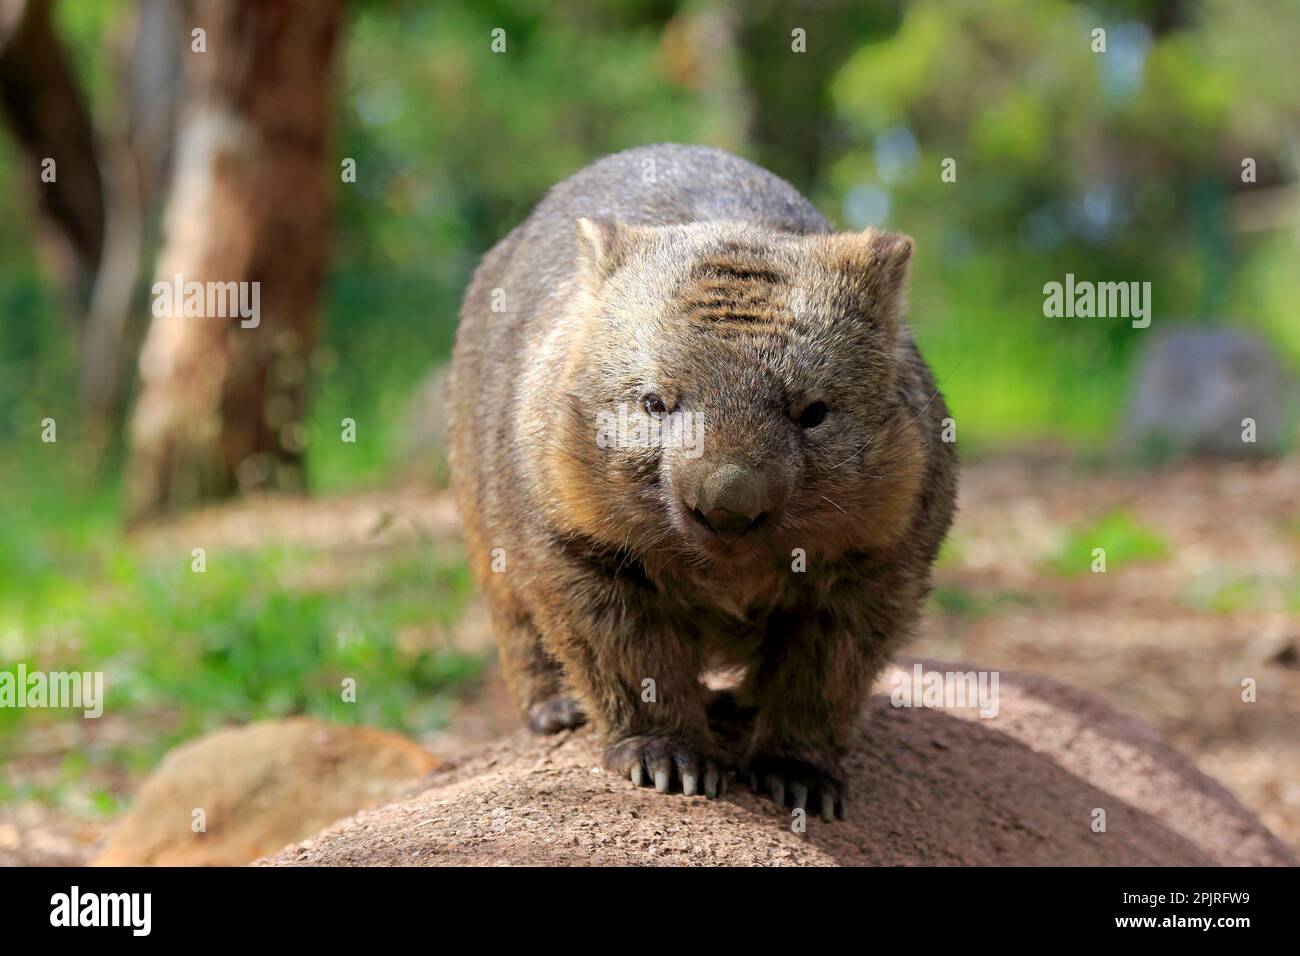 Wombat HD Wallpaper #01599 | wallpaperspick.com